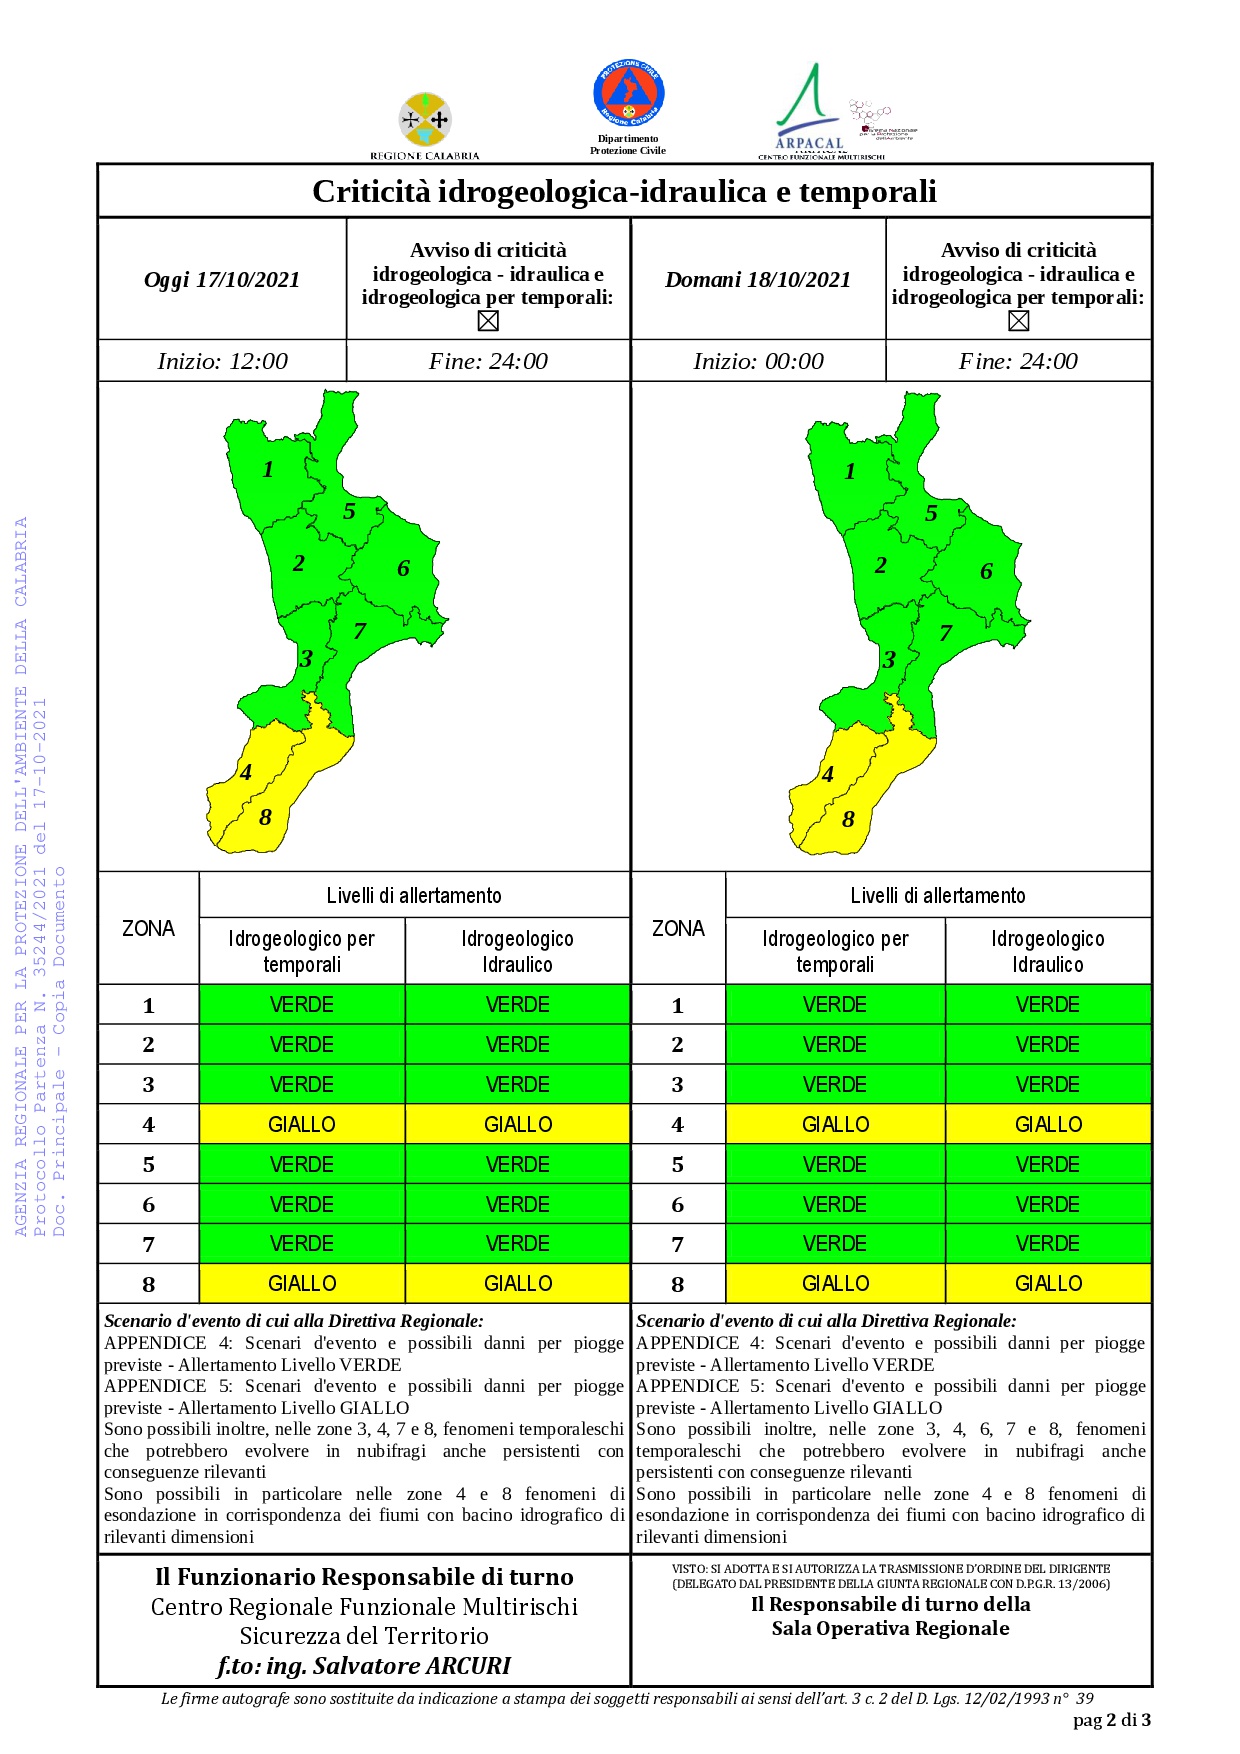 Criticità idrogeologica-idraulica e temporali in Calabria 17-10-2021